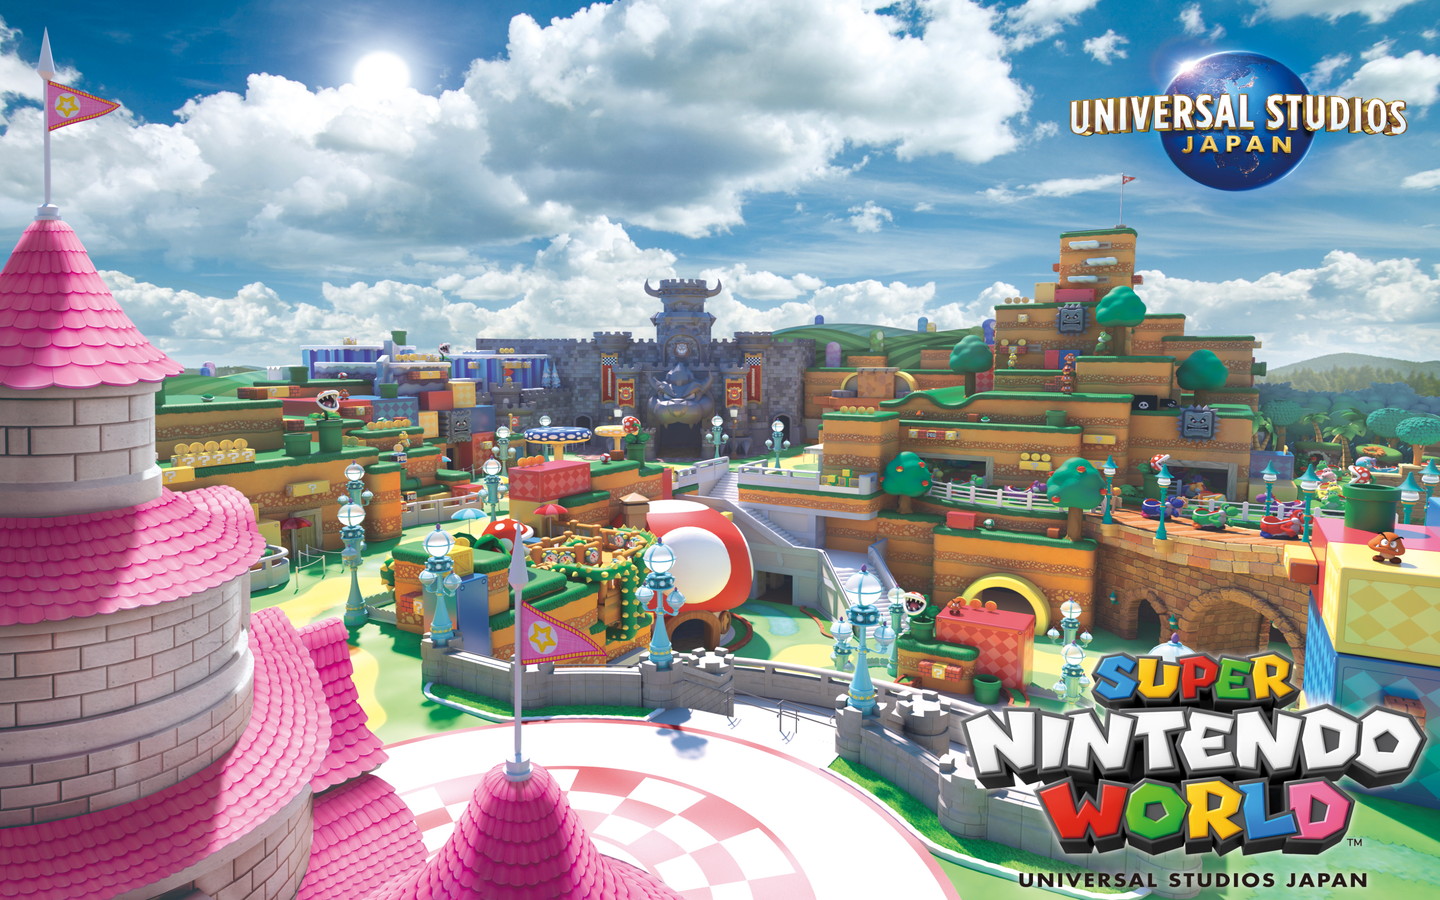 Usj 世界初 任天堂 のテーマエリア Super Nintendo World の新ビジュアルを公開 19年11月21日 Biglobeニュース